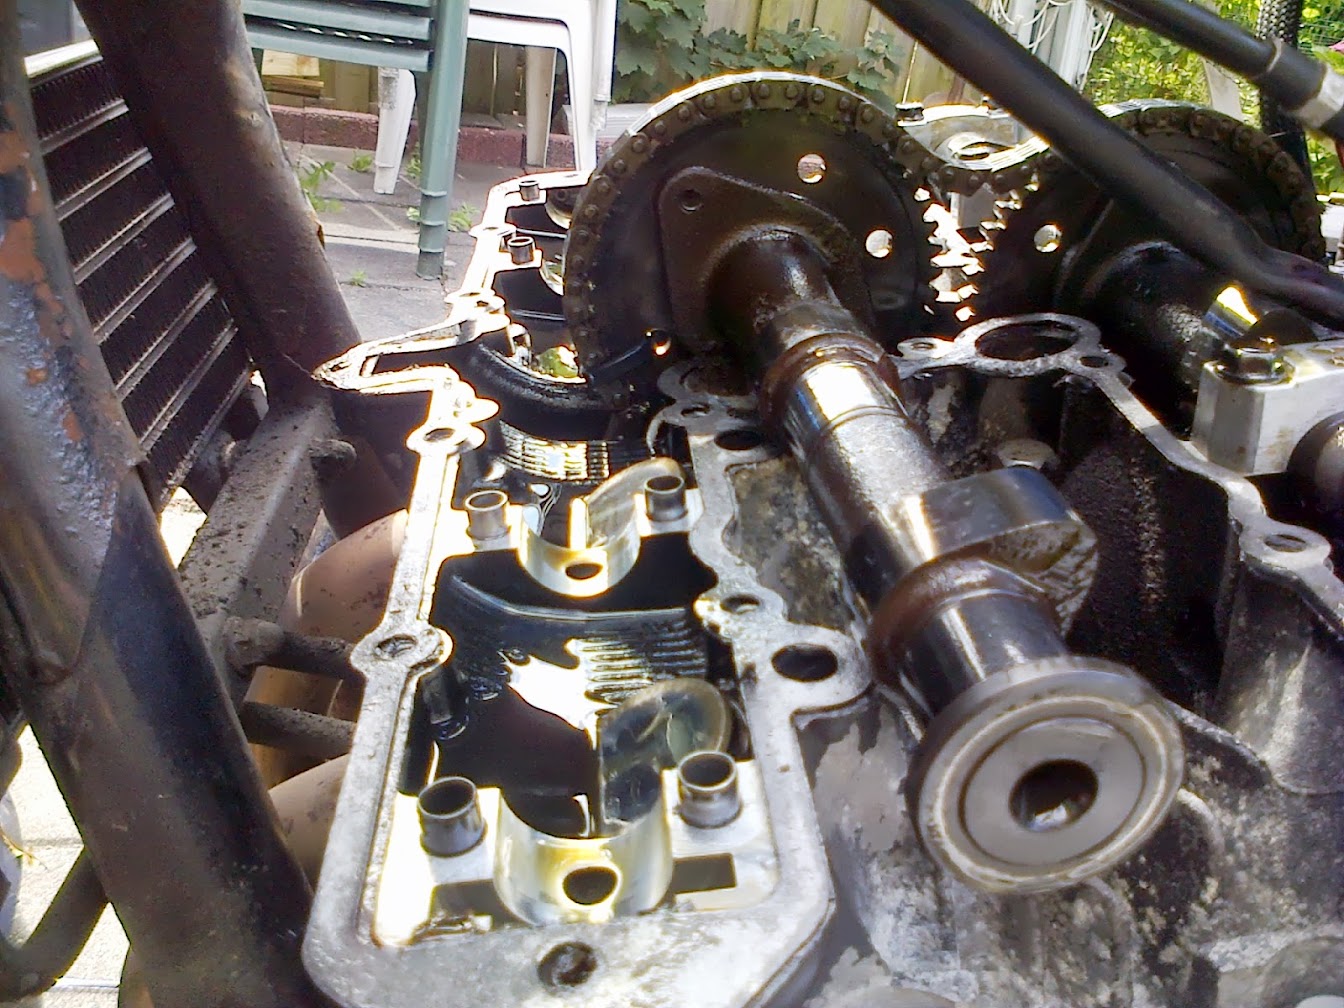 valve adjustment pictures | THE KAWASAKI EN450 / 454 LTD FORUM